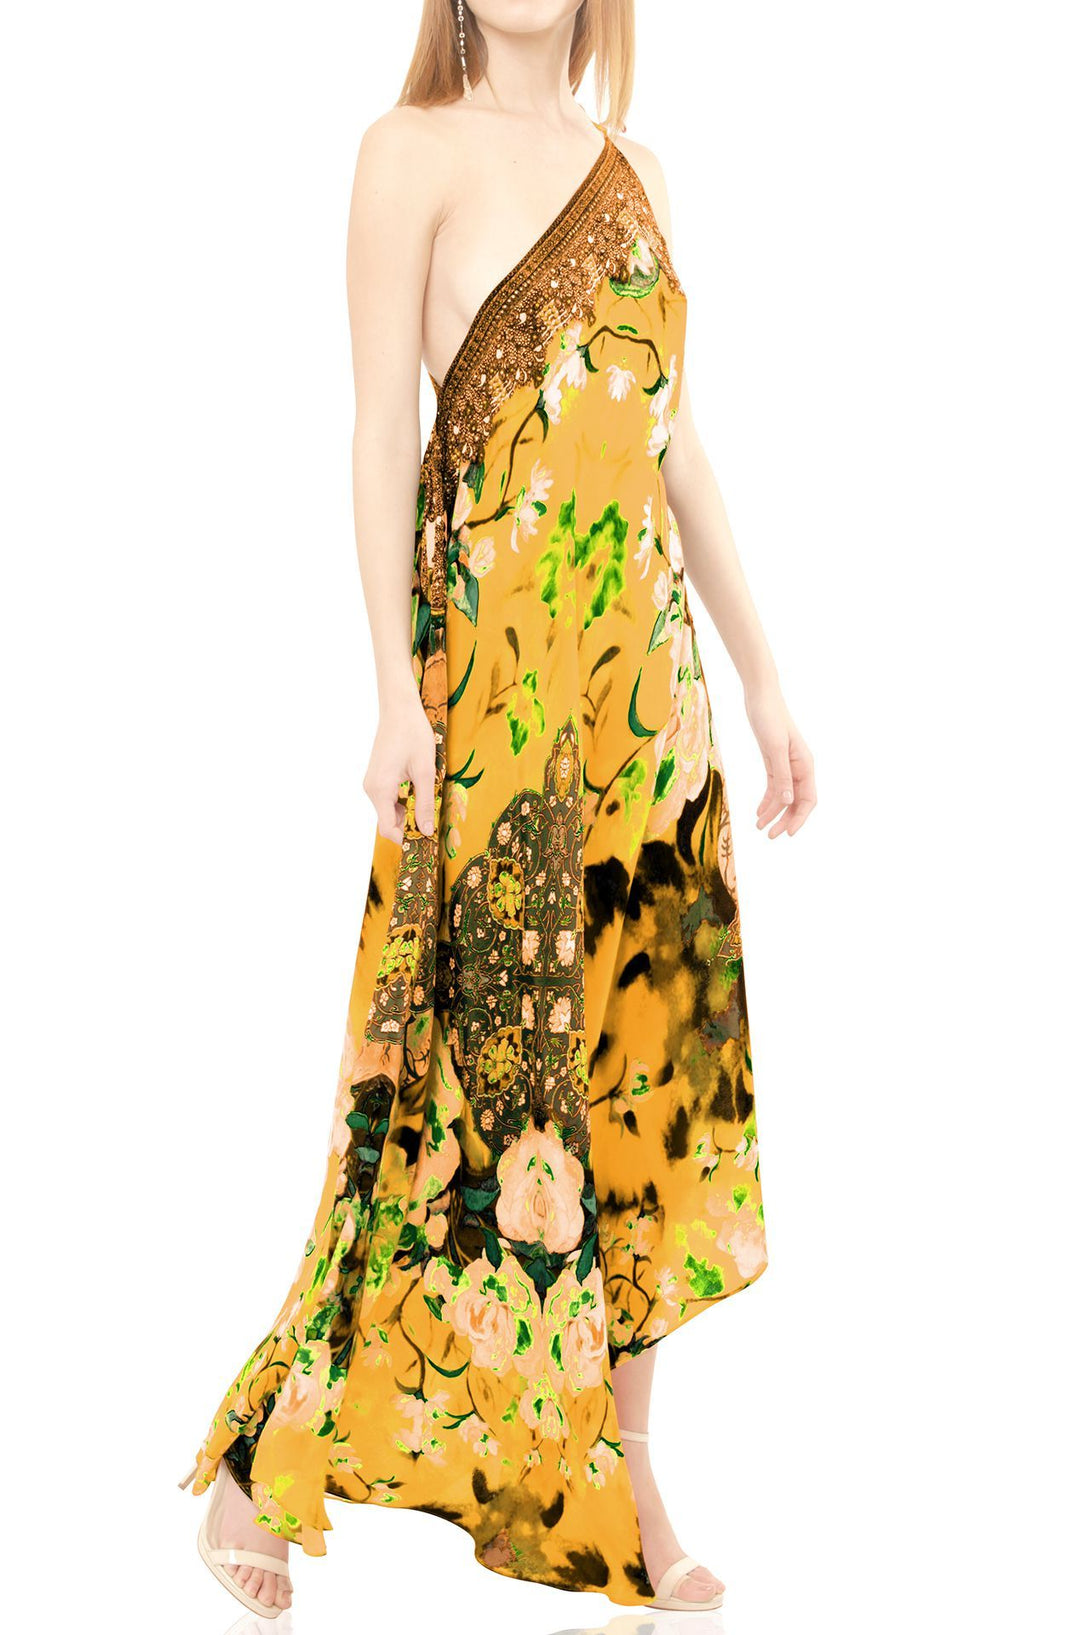  yellow maxi floral dress, formal dresses for women, Shahida Parides, plunging neckline cocktail dress,